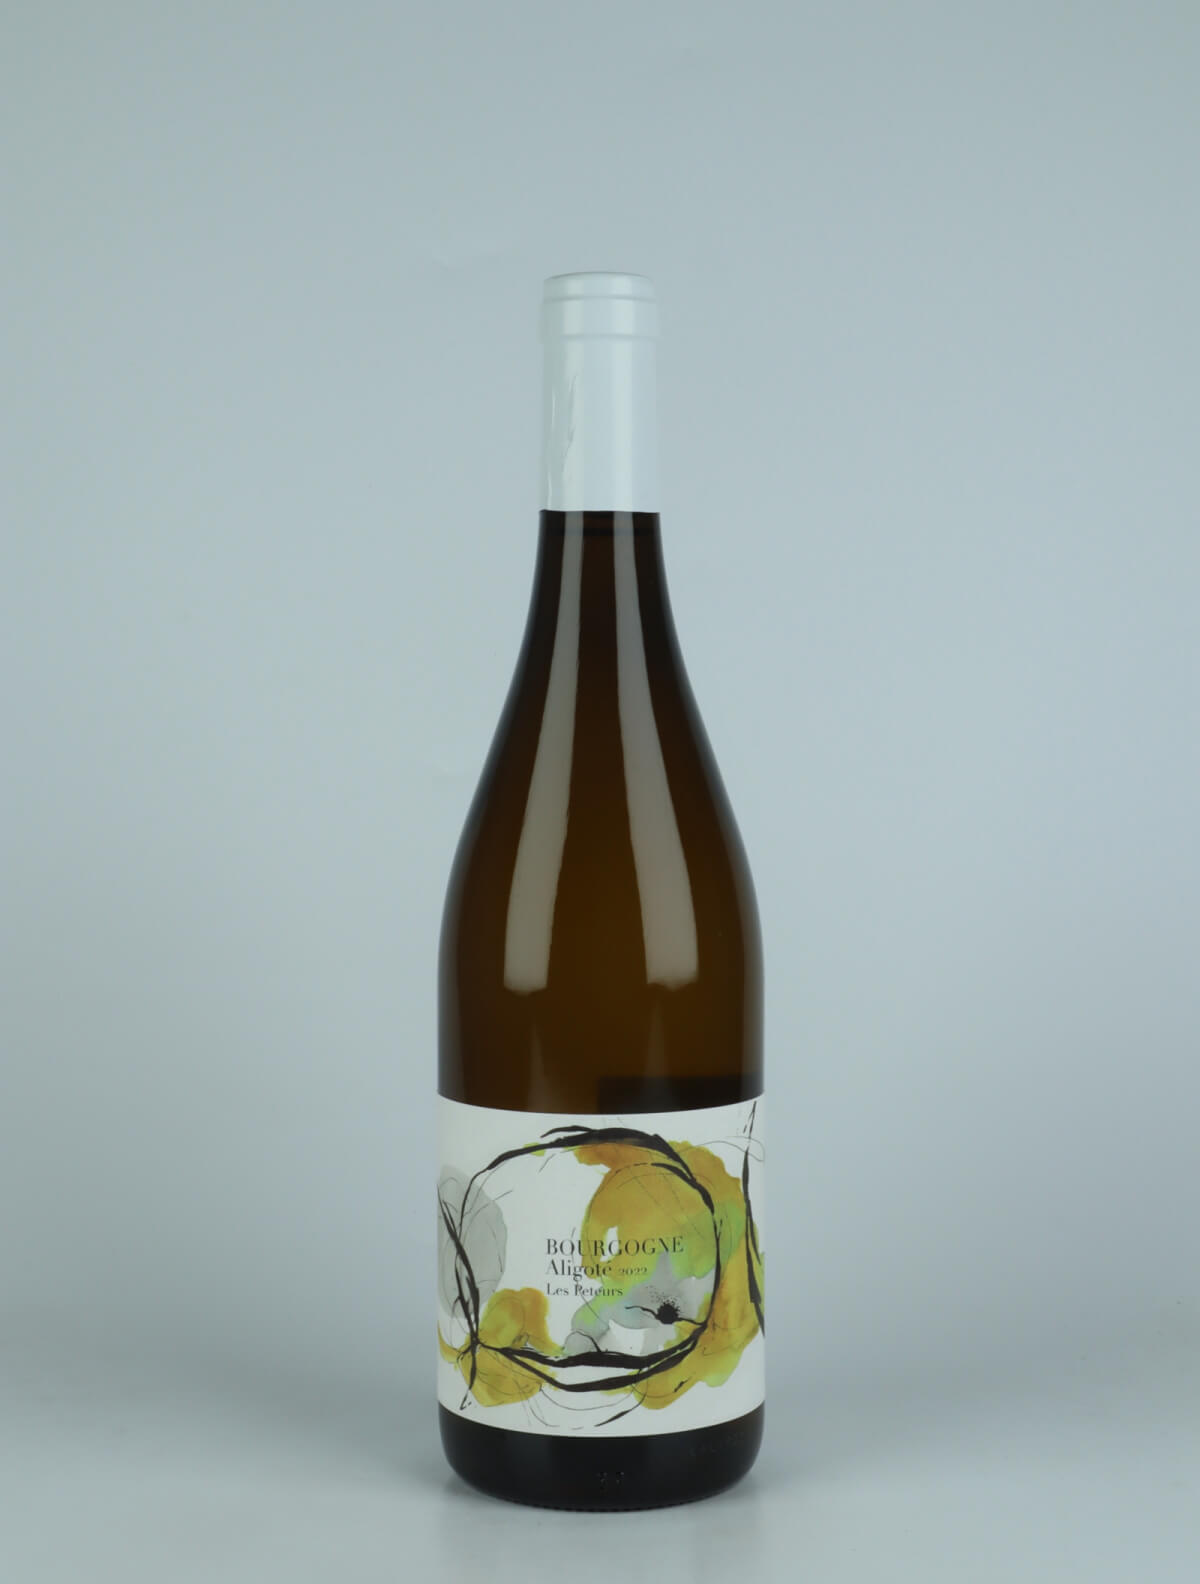 A bottle 2022 Bourgogne Aligoté - Les Peteurs White wine from Domaine Didon, Burgundy in France